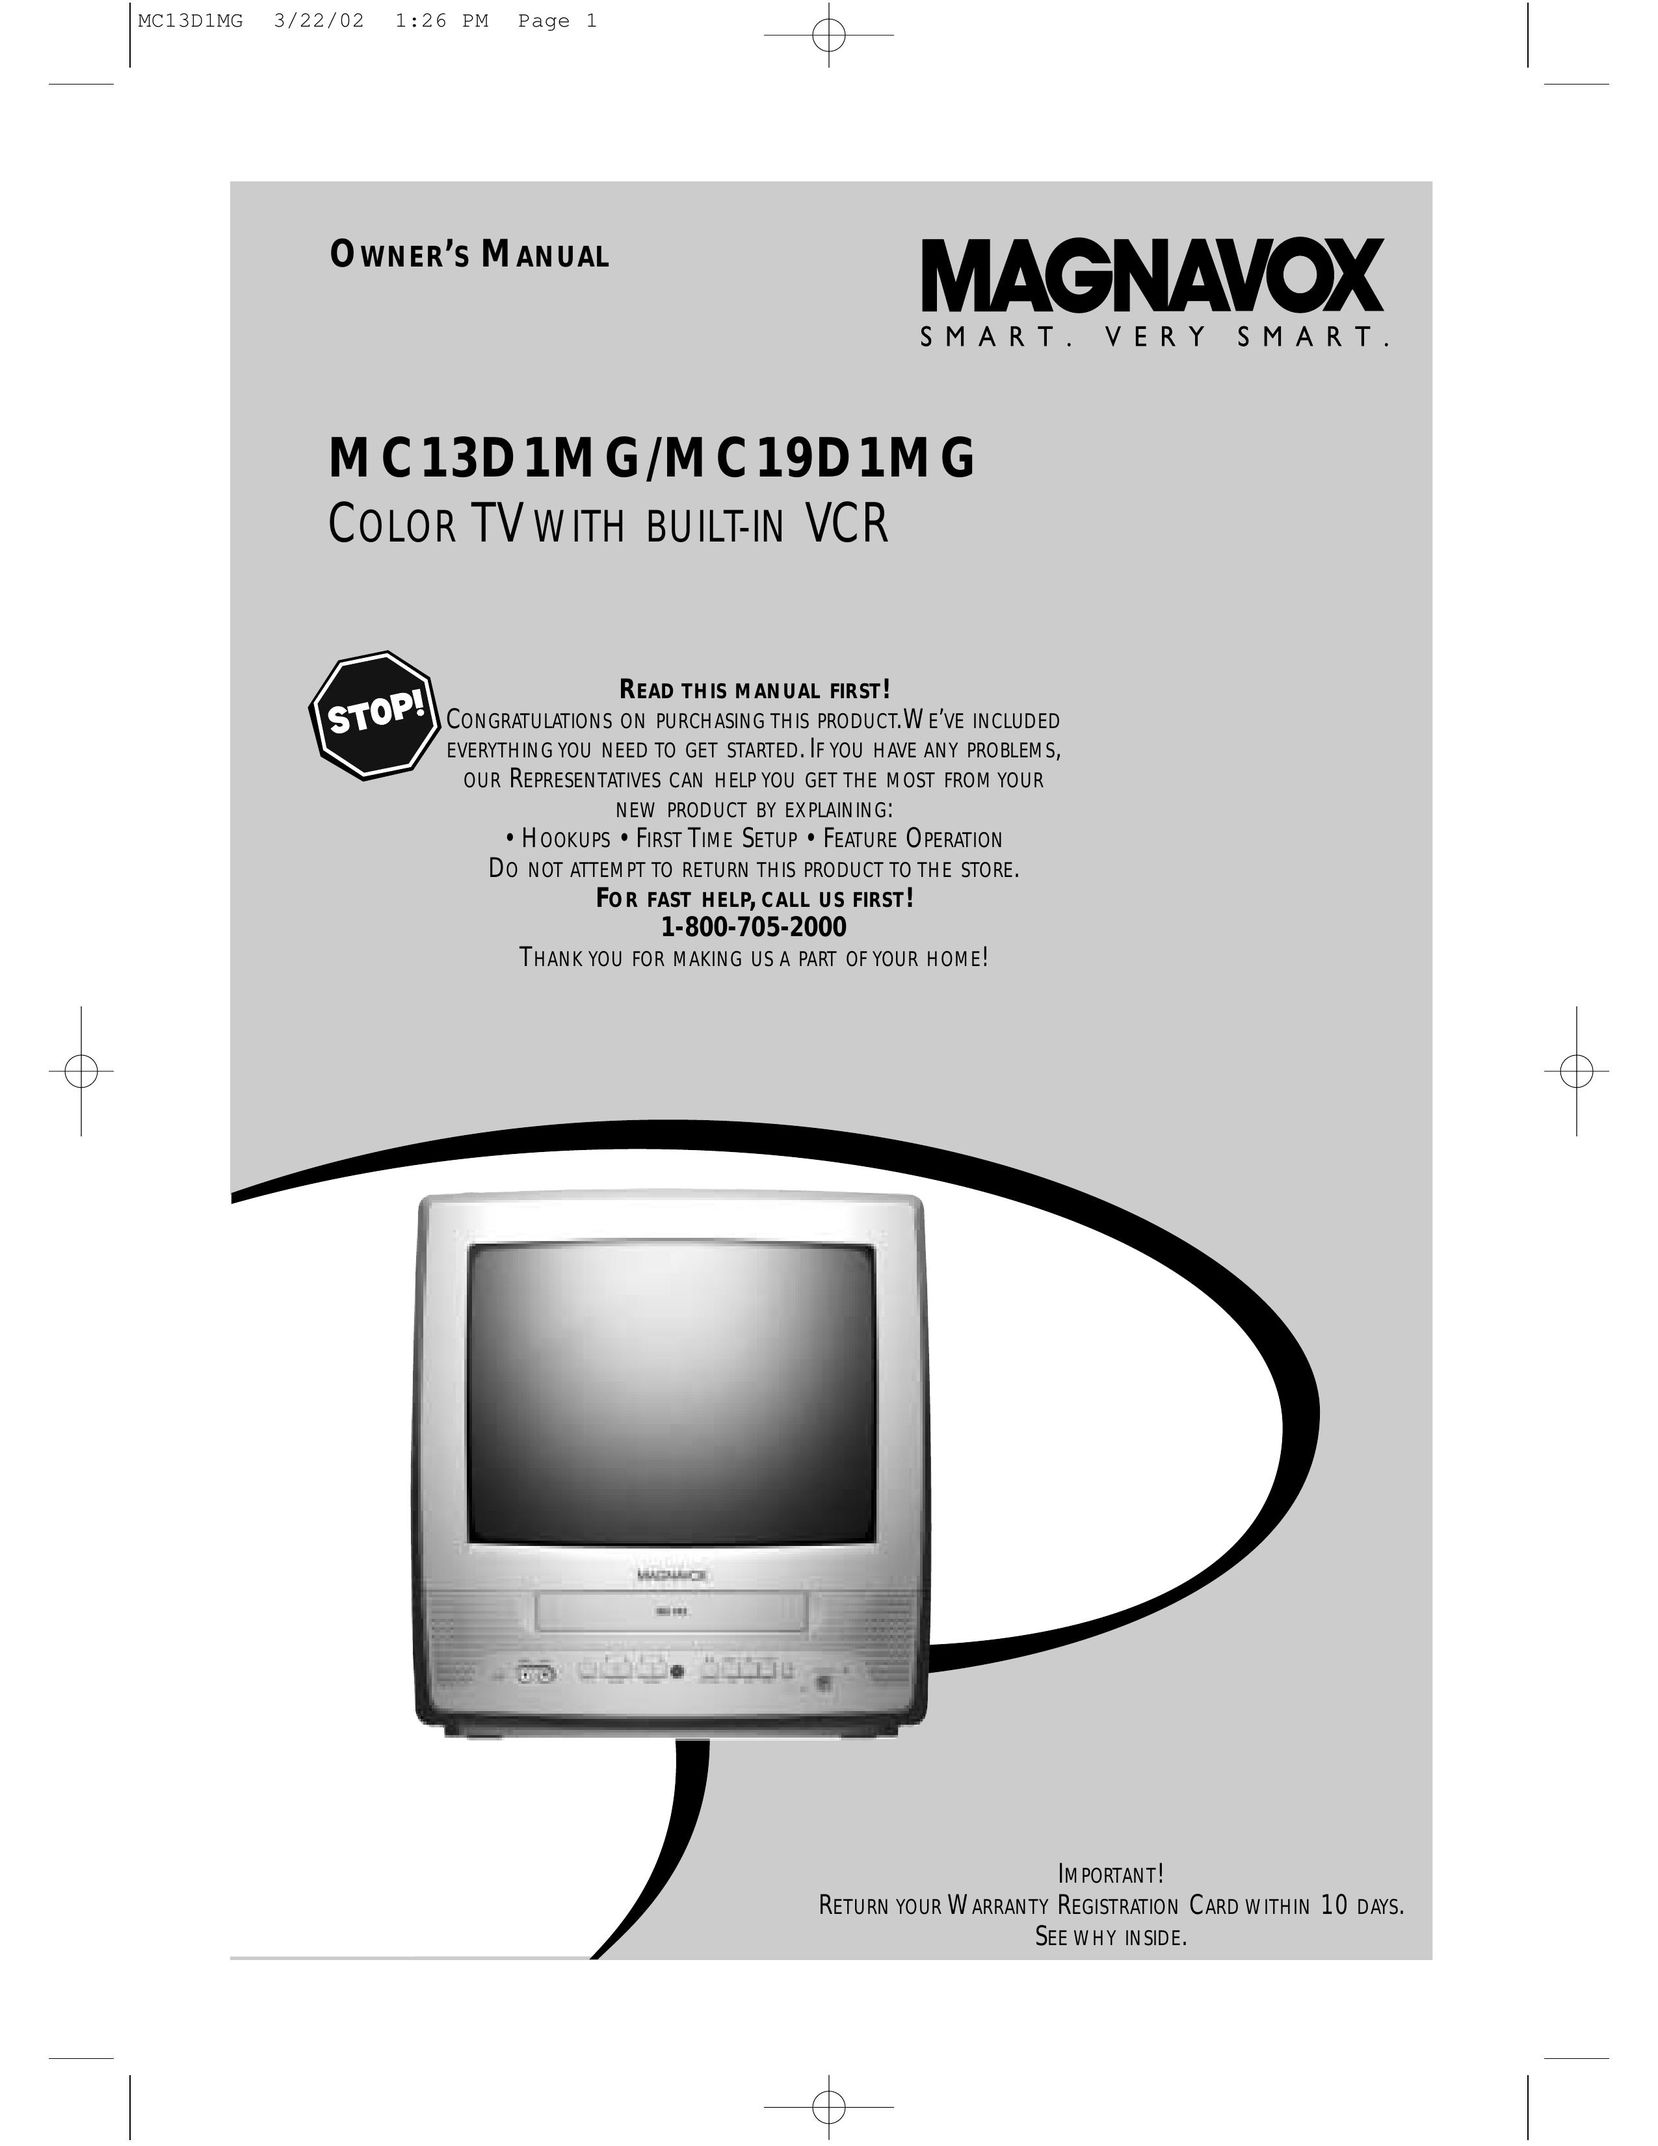 Magnavox MC19D1MG TV VCR Combo User Manual